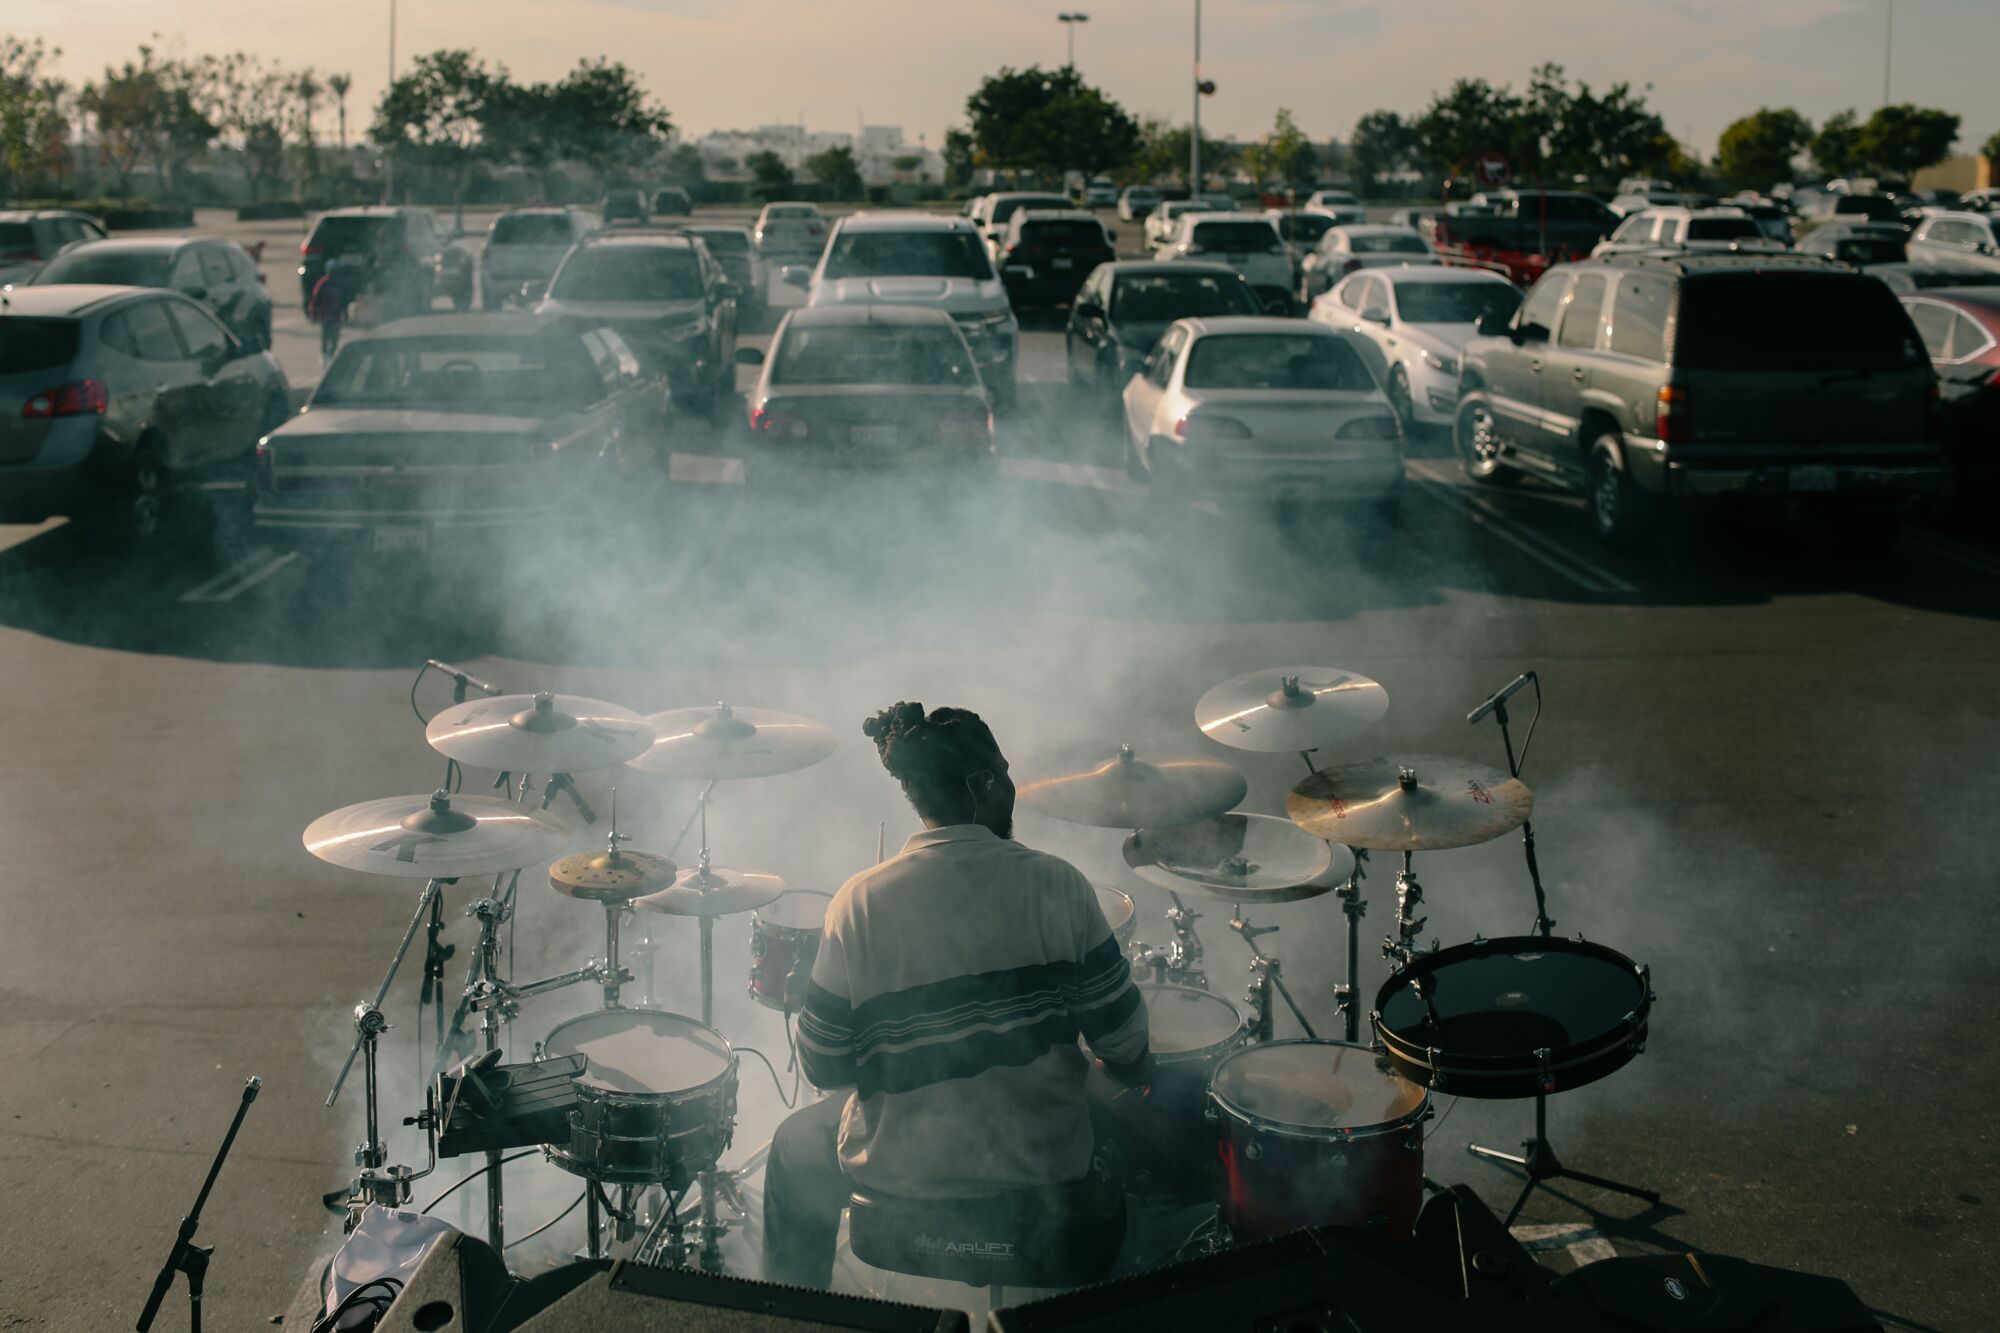  A man sits behind a massive drum kit